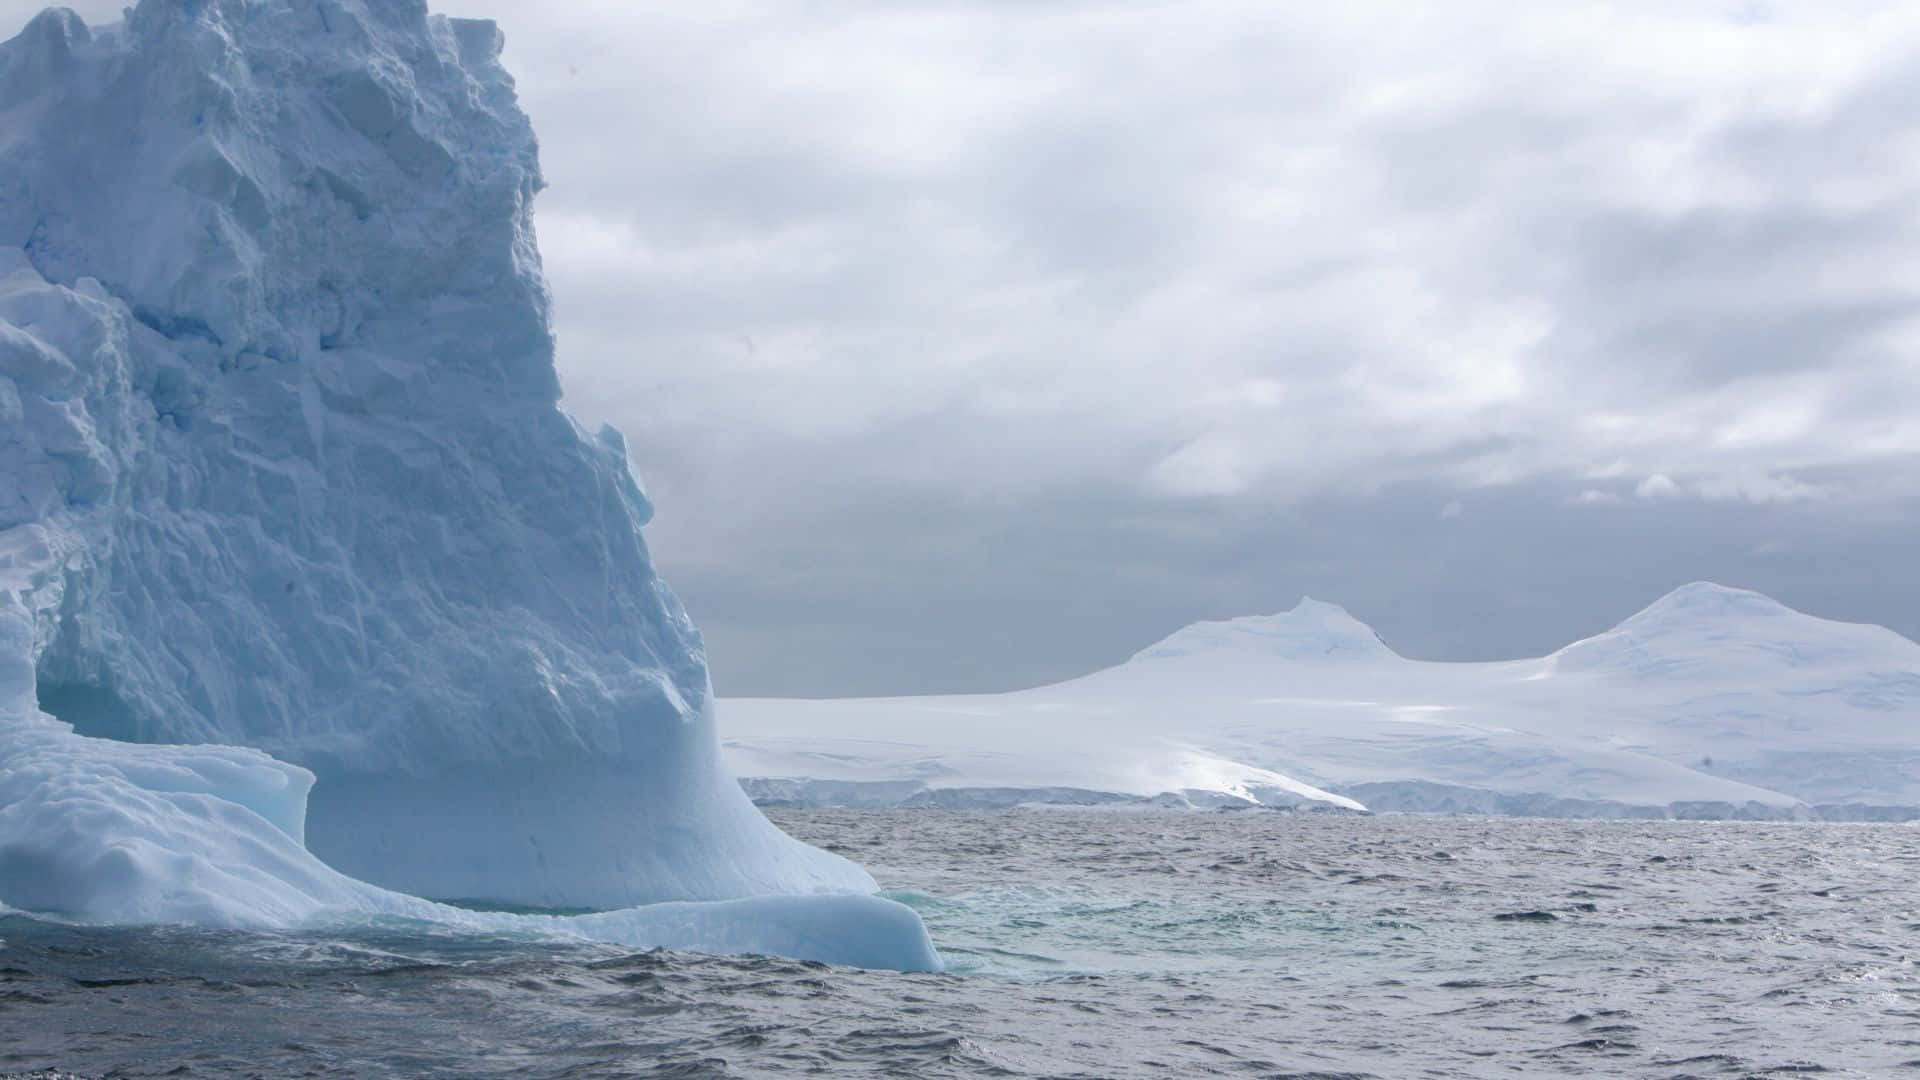 The endless horizon of Antarctica's icy terrain